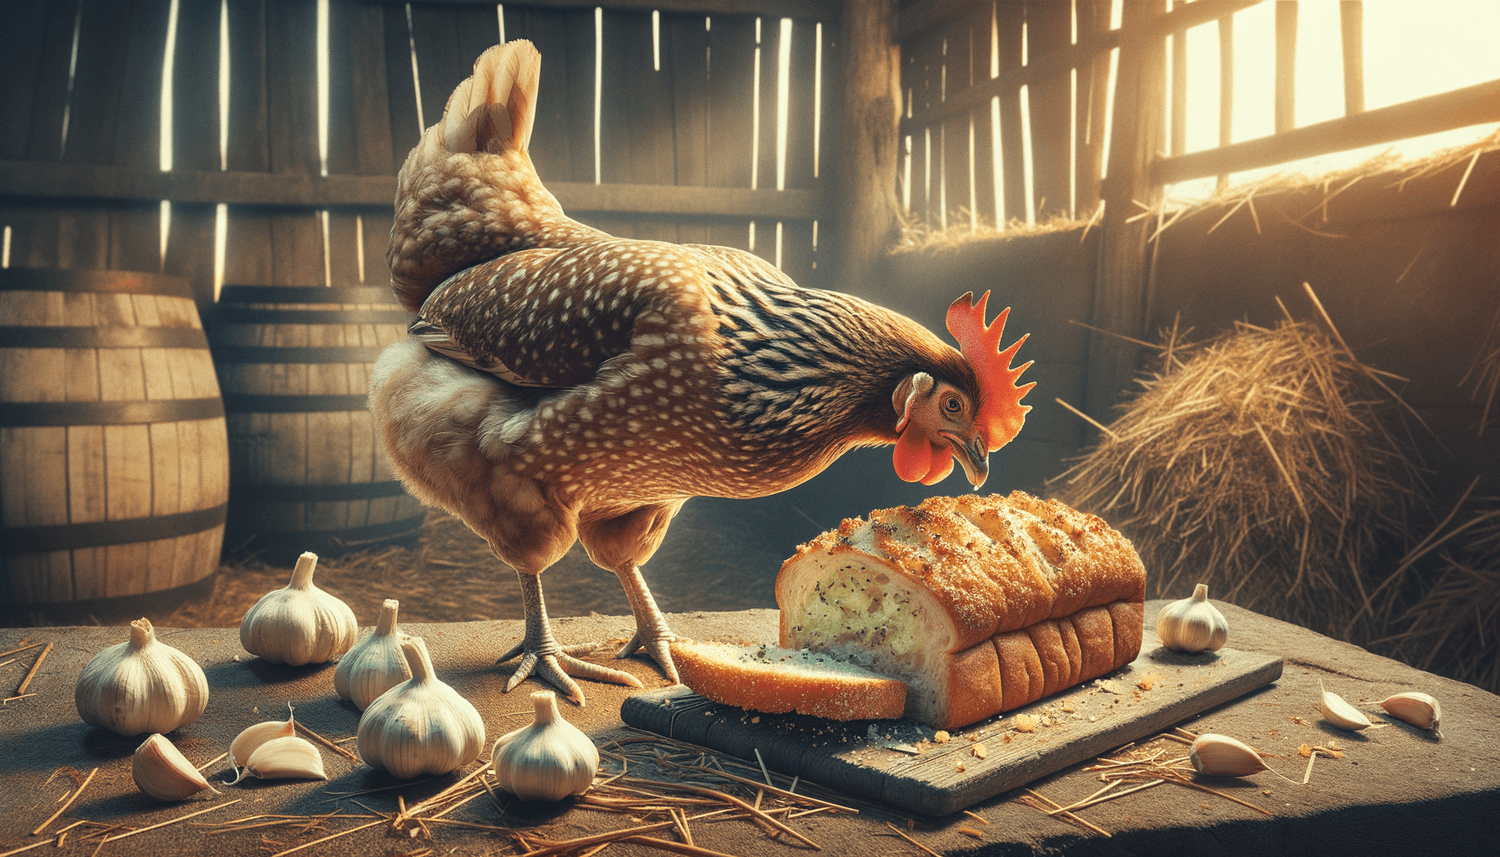 Can Chickens Eat Garlic Bread?